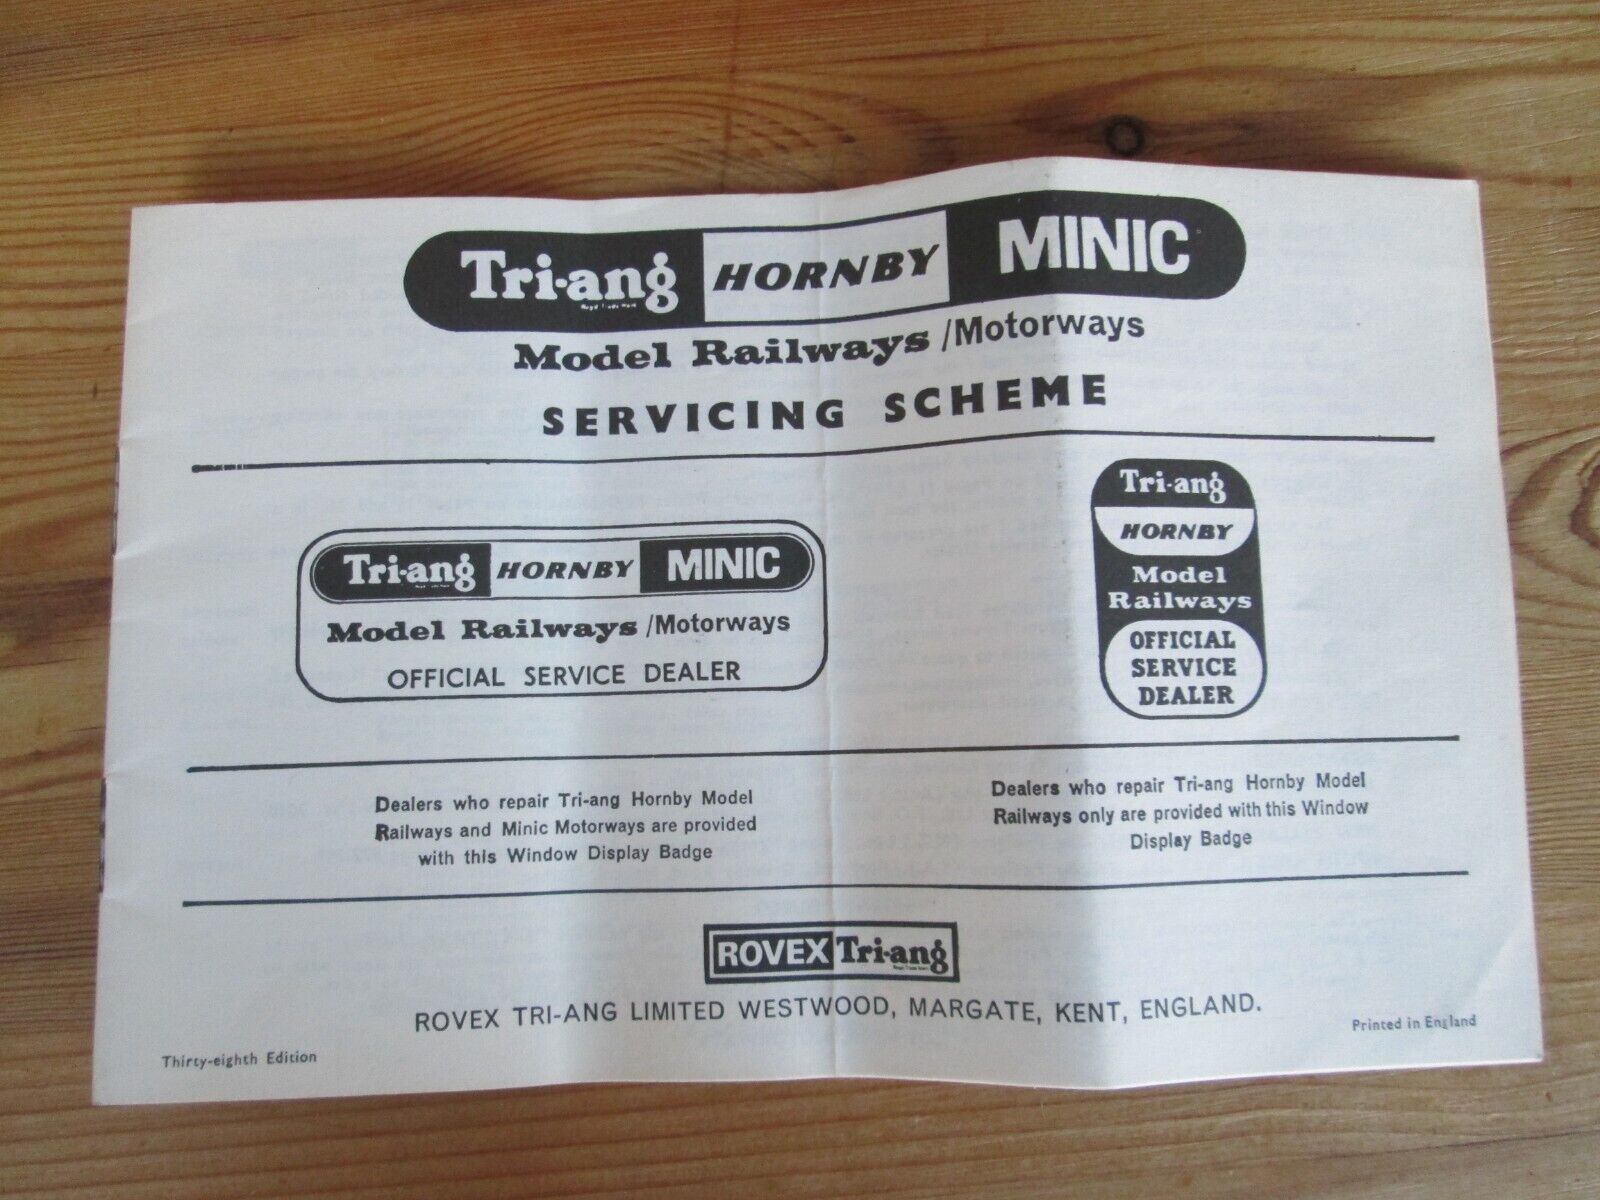 Tri-ang Hornby Minic, Model Railways/Motorways, Service scheme (stockists)